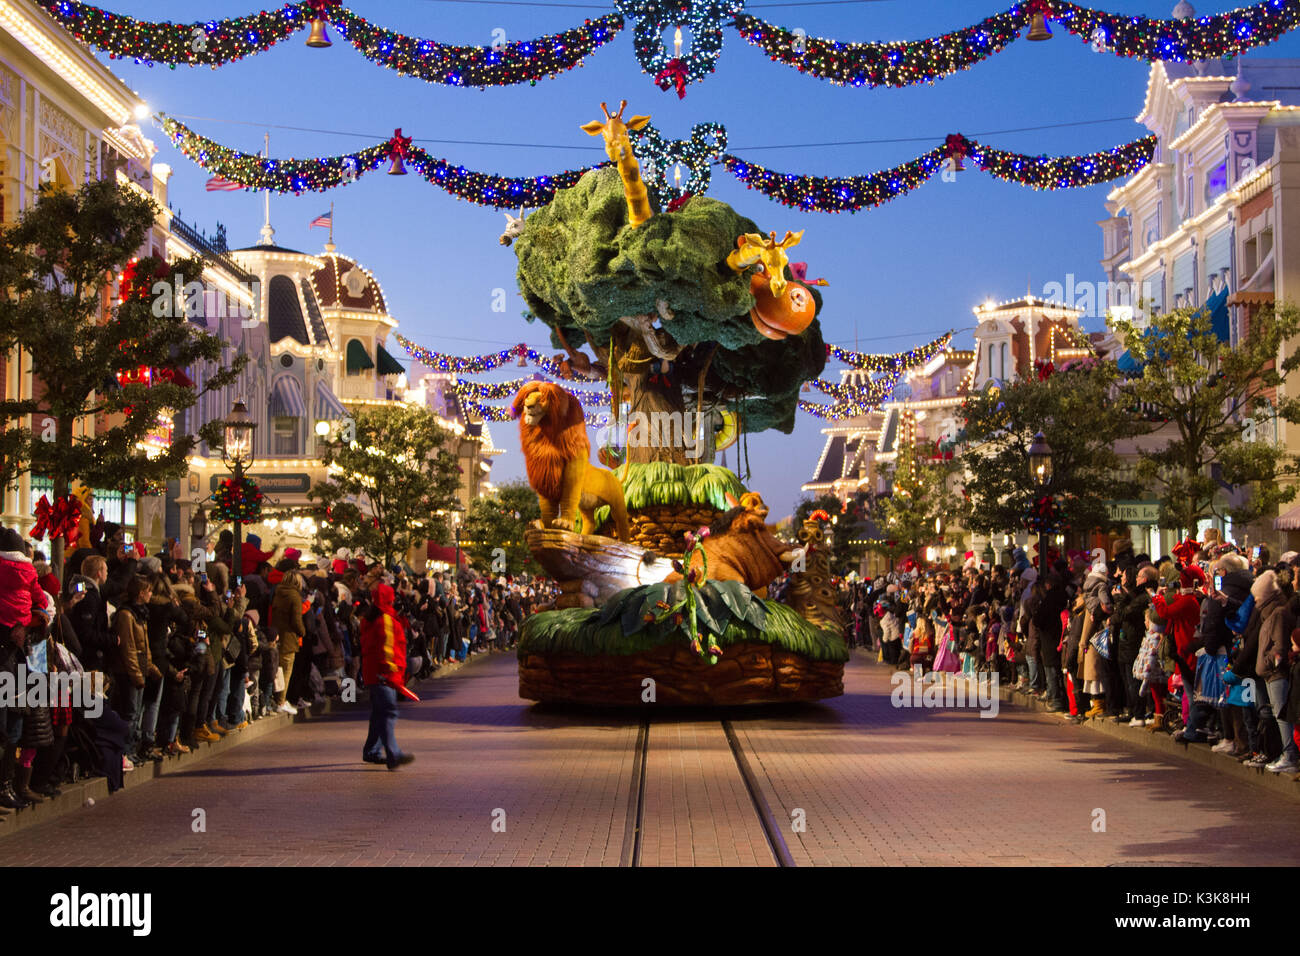 Disney's Christmas parade 'The lion king' at Disneyland Paris Marne La Vallee France Stock Photo